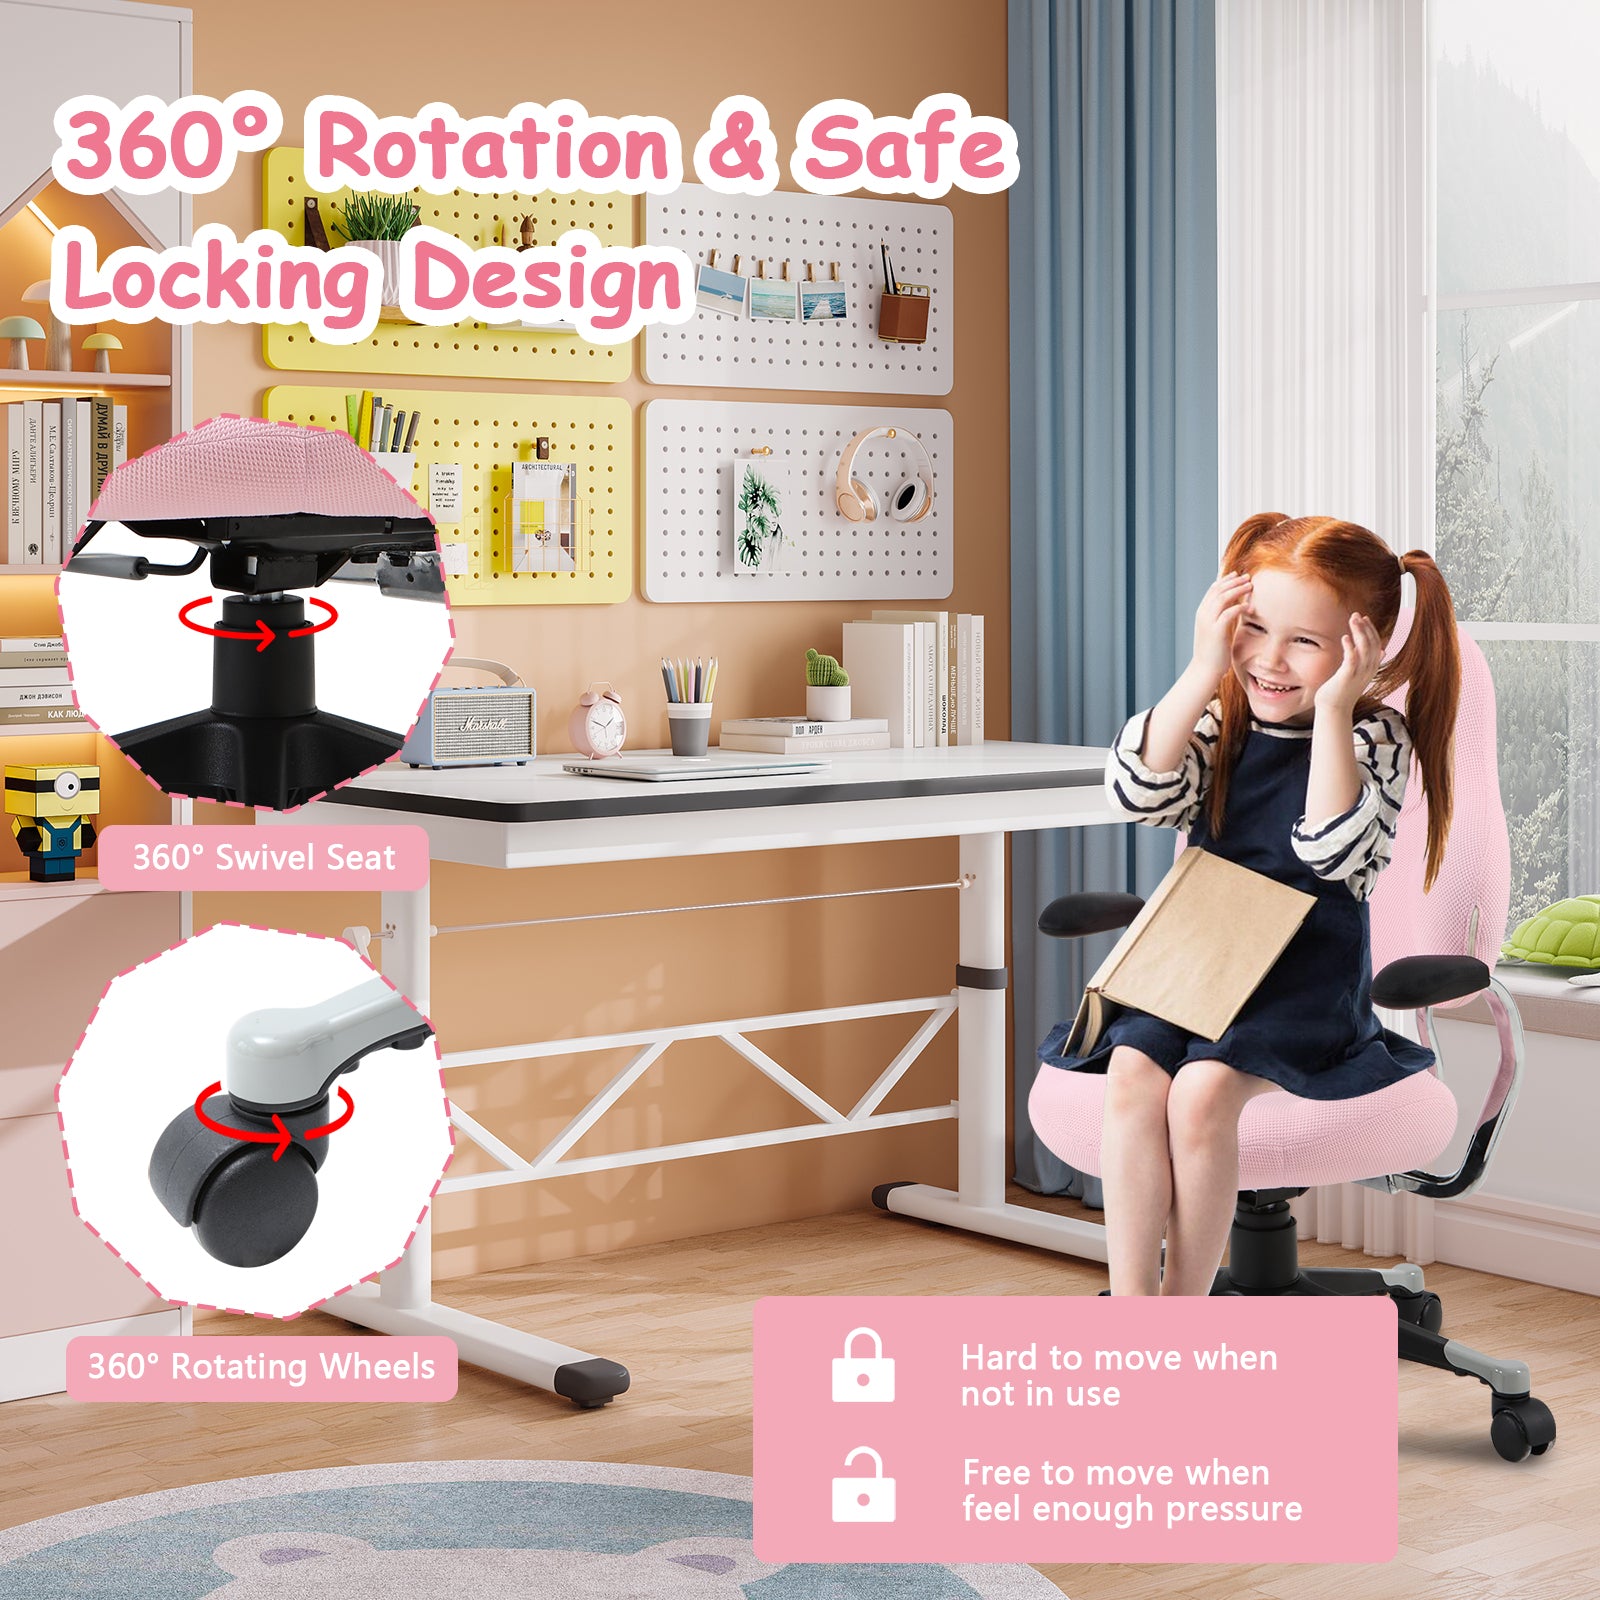 Ergonomic Kids Desk Chair Children Study Swivel Chair with Adjustable Height, Pink